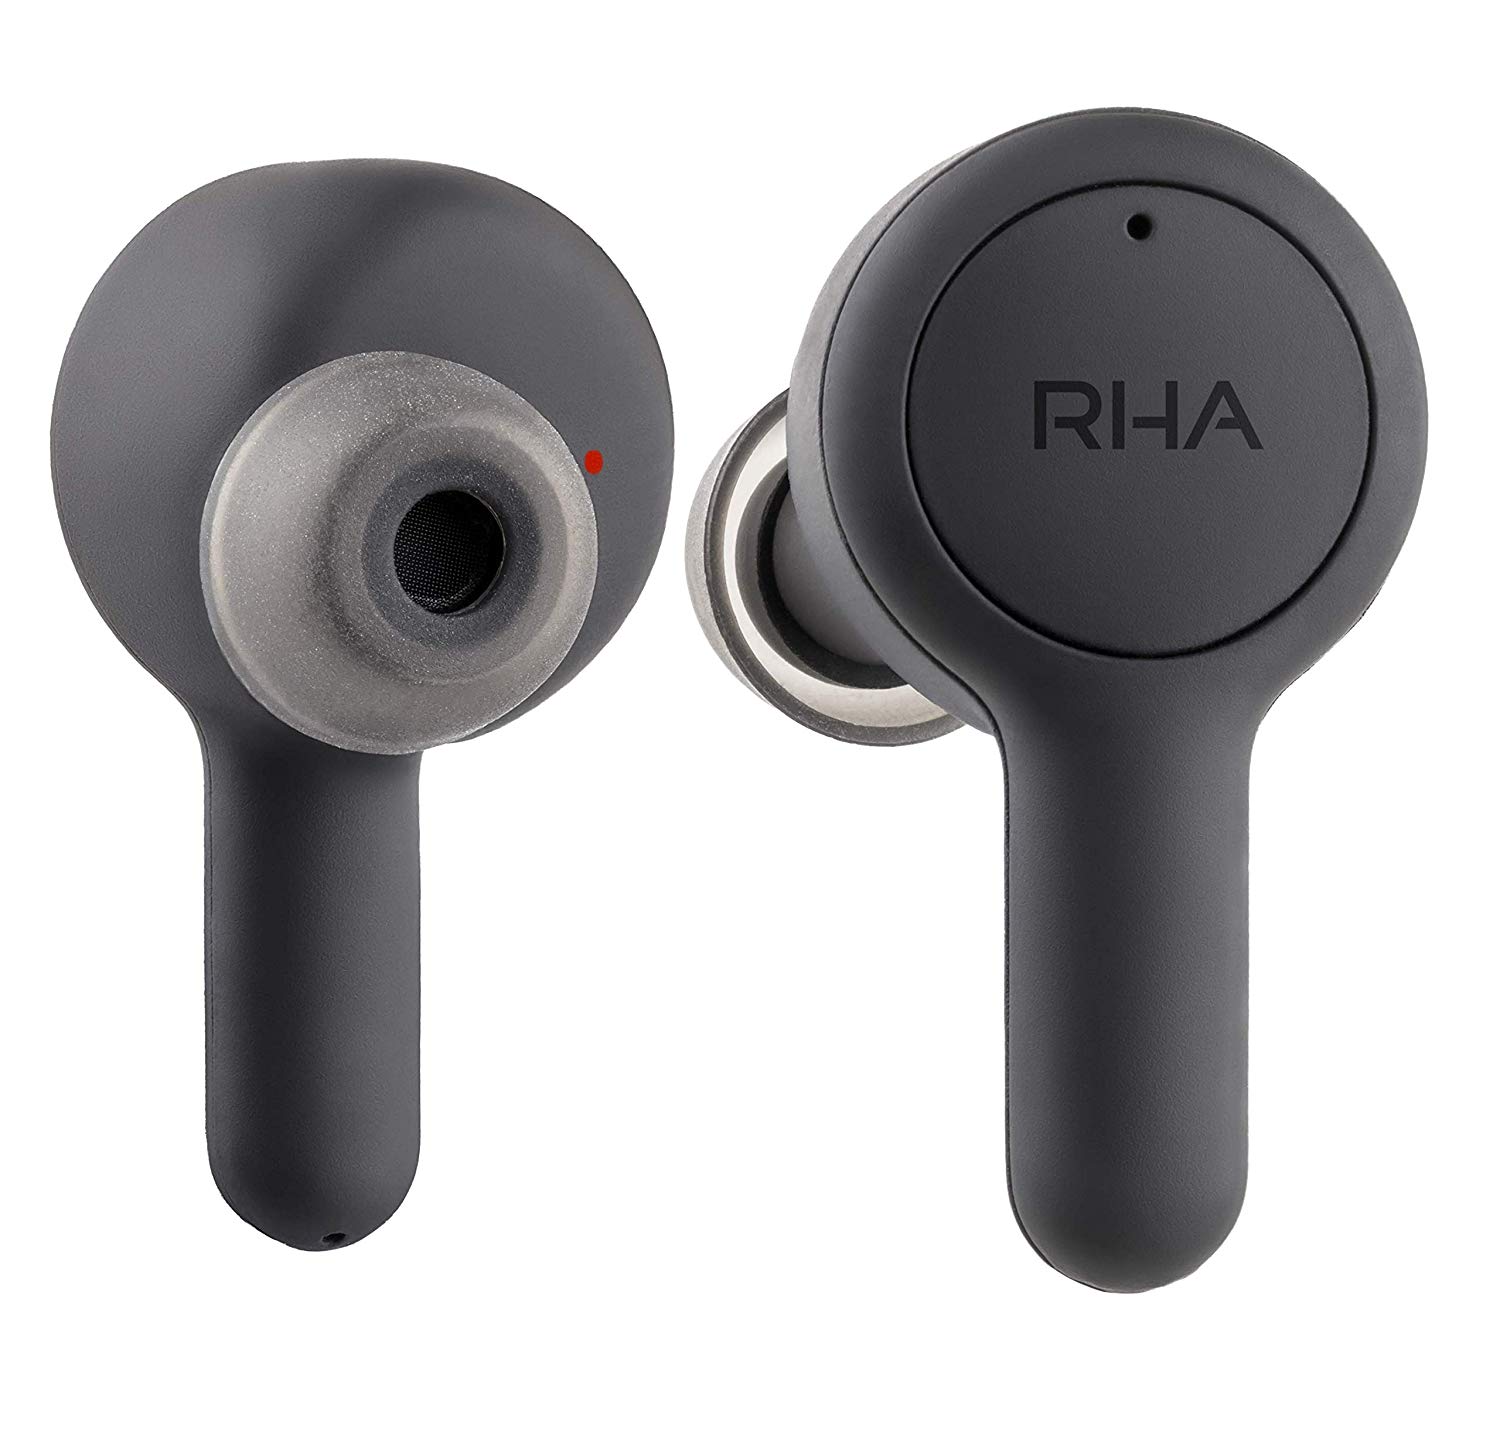 RHA Trueconnect Truly Wireless Earbuds REVIEW 2020